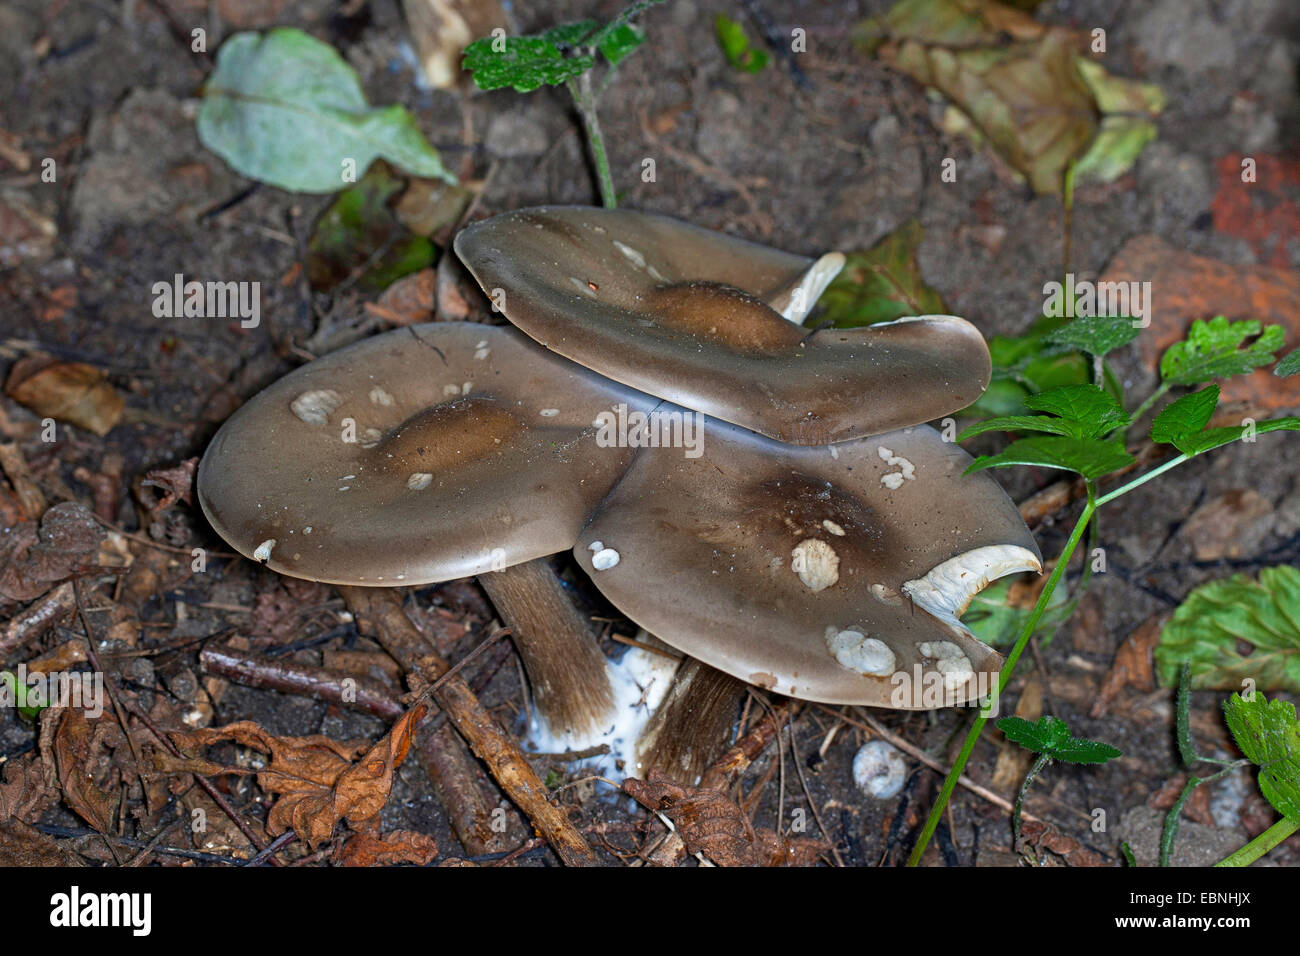 Cream Grey Toadstall, Melanoleuca Mushroom (Melanoleuca melaleuca, Melanoleuca vulgaris, Tricholoma melaleucum), three fruiting bodies on forest floor, Germany Stock Photo